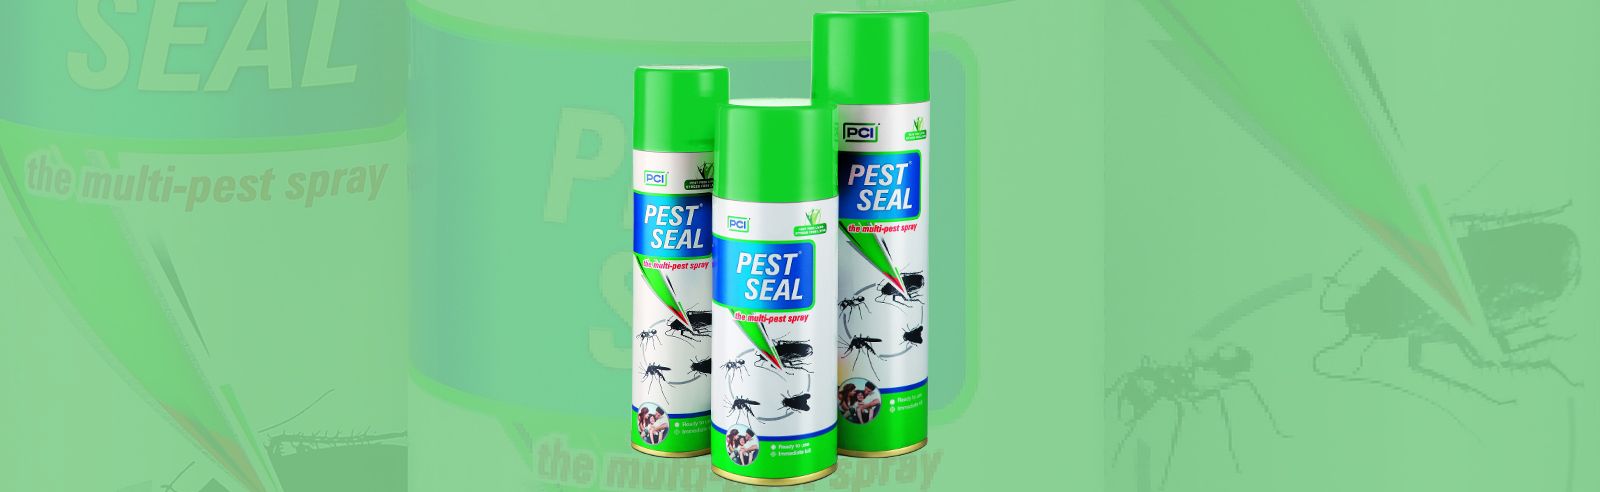 Pest Seal | The Multi Pest Spray